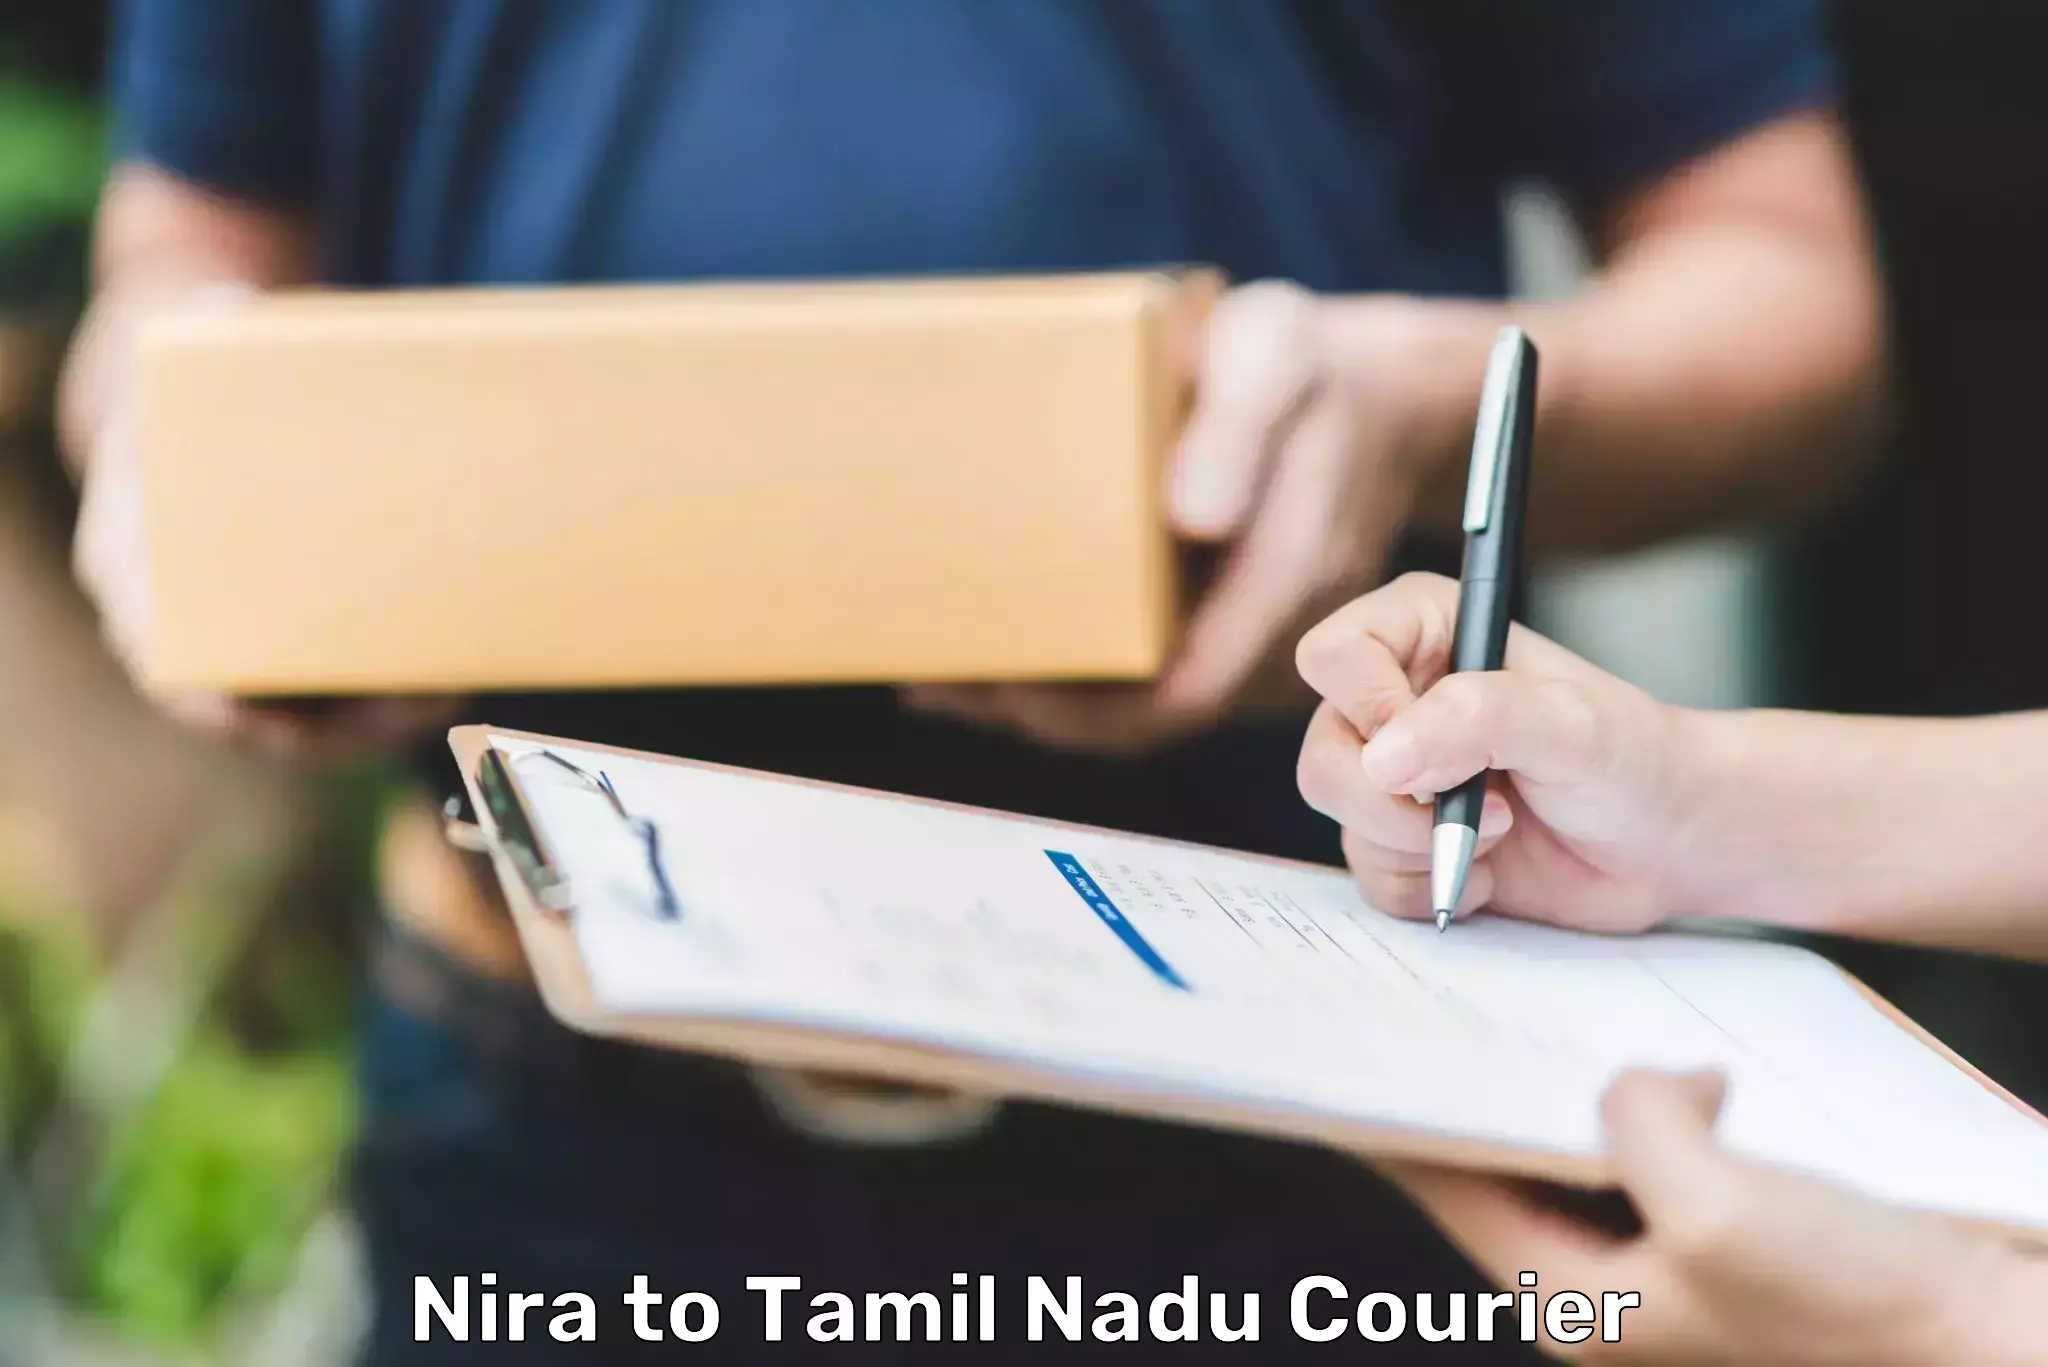 Courier insurance Nira to Villupuram